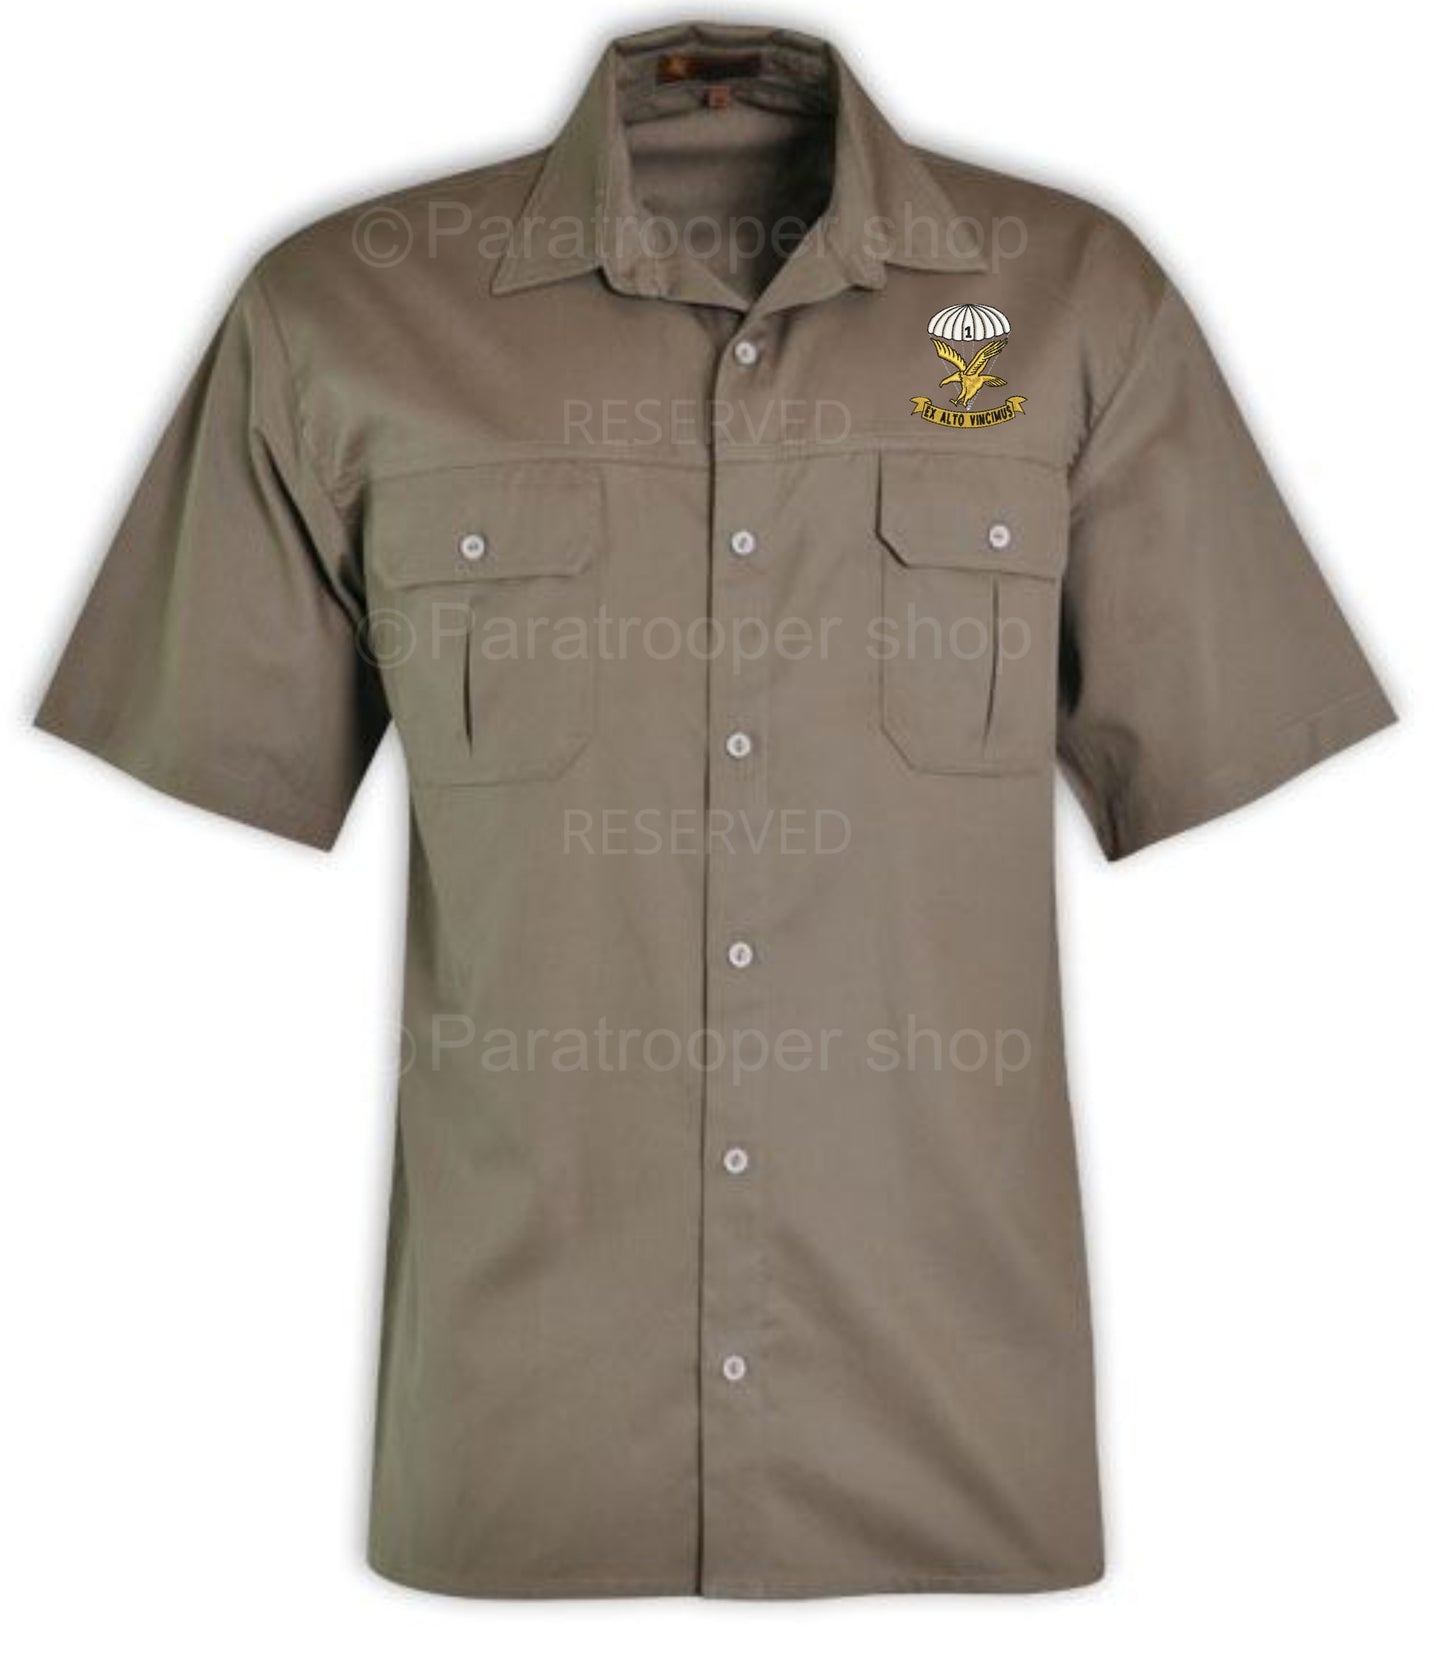 1 Parachute Battalion Bush Shirt - BUSH-01 std 1 PBN Paratrooper Shop